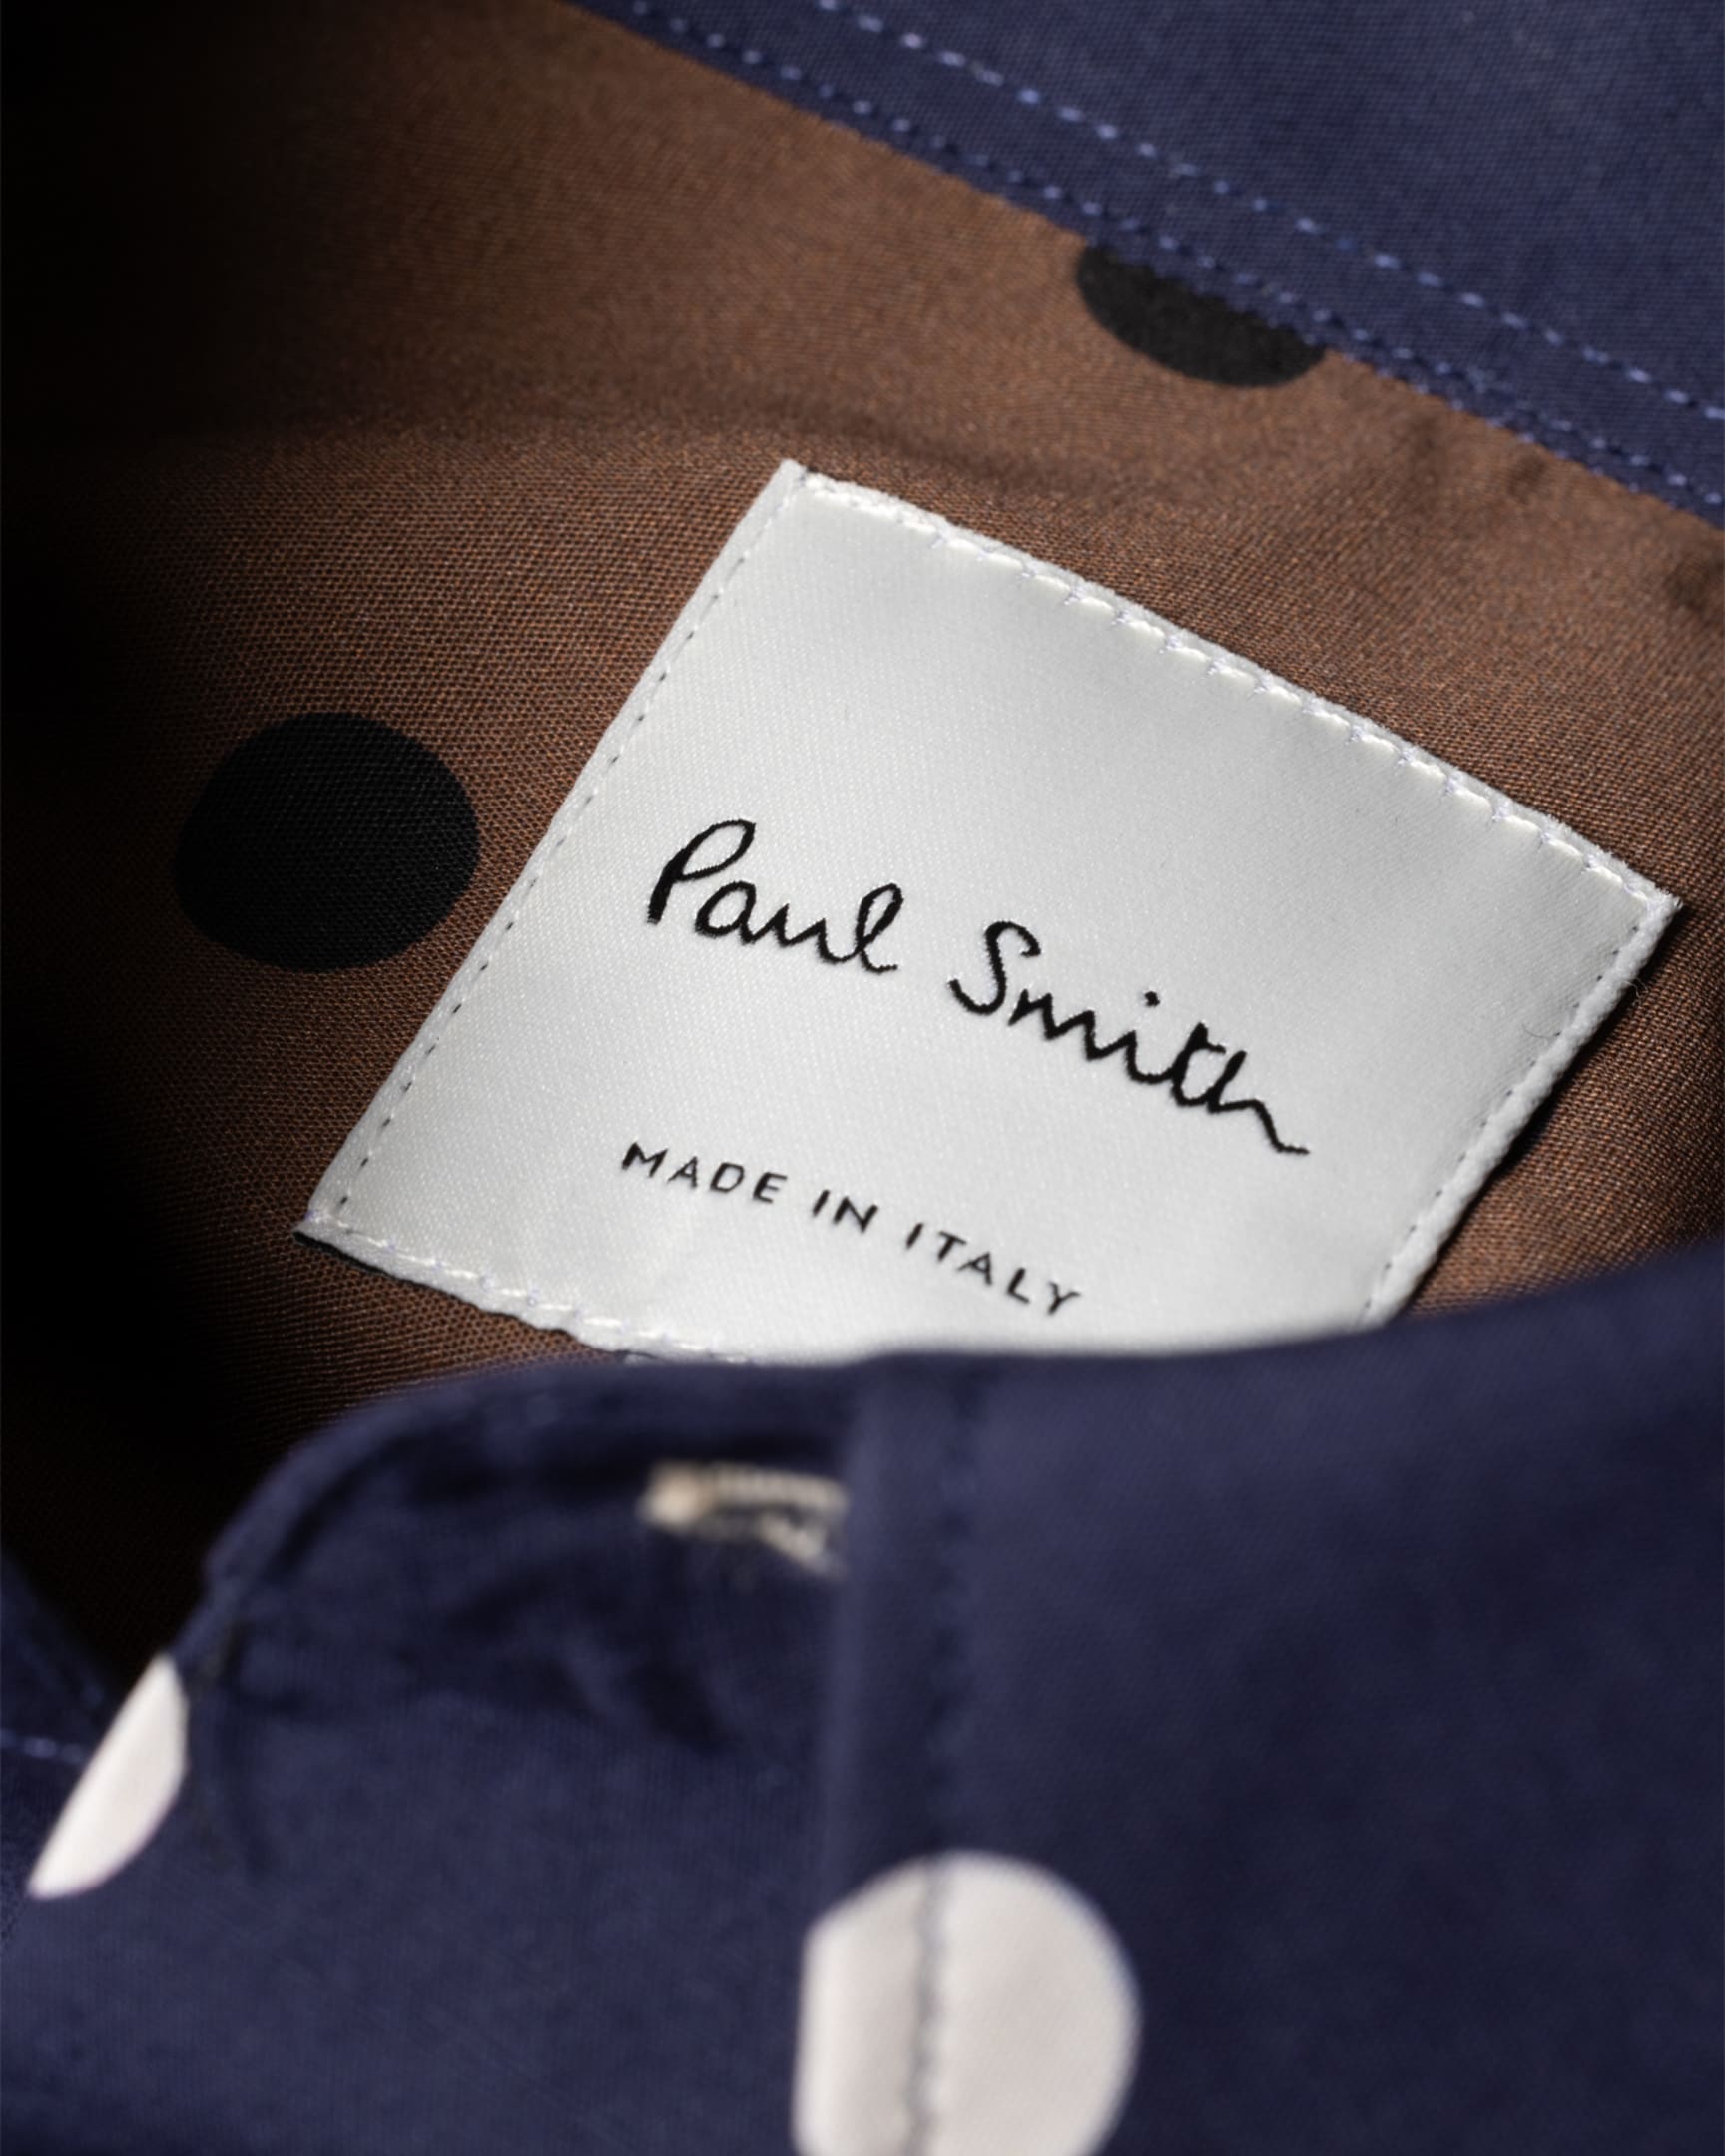 Detail View - Navy Cotton Polka Dot Shirt Paul Smith